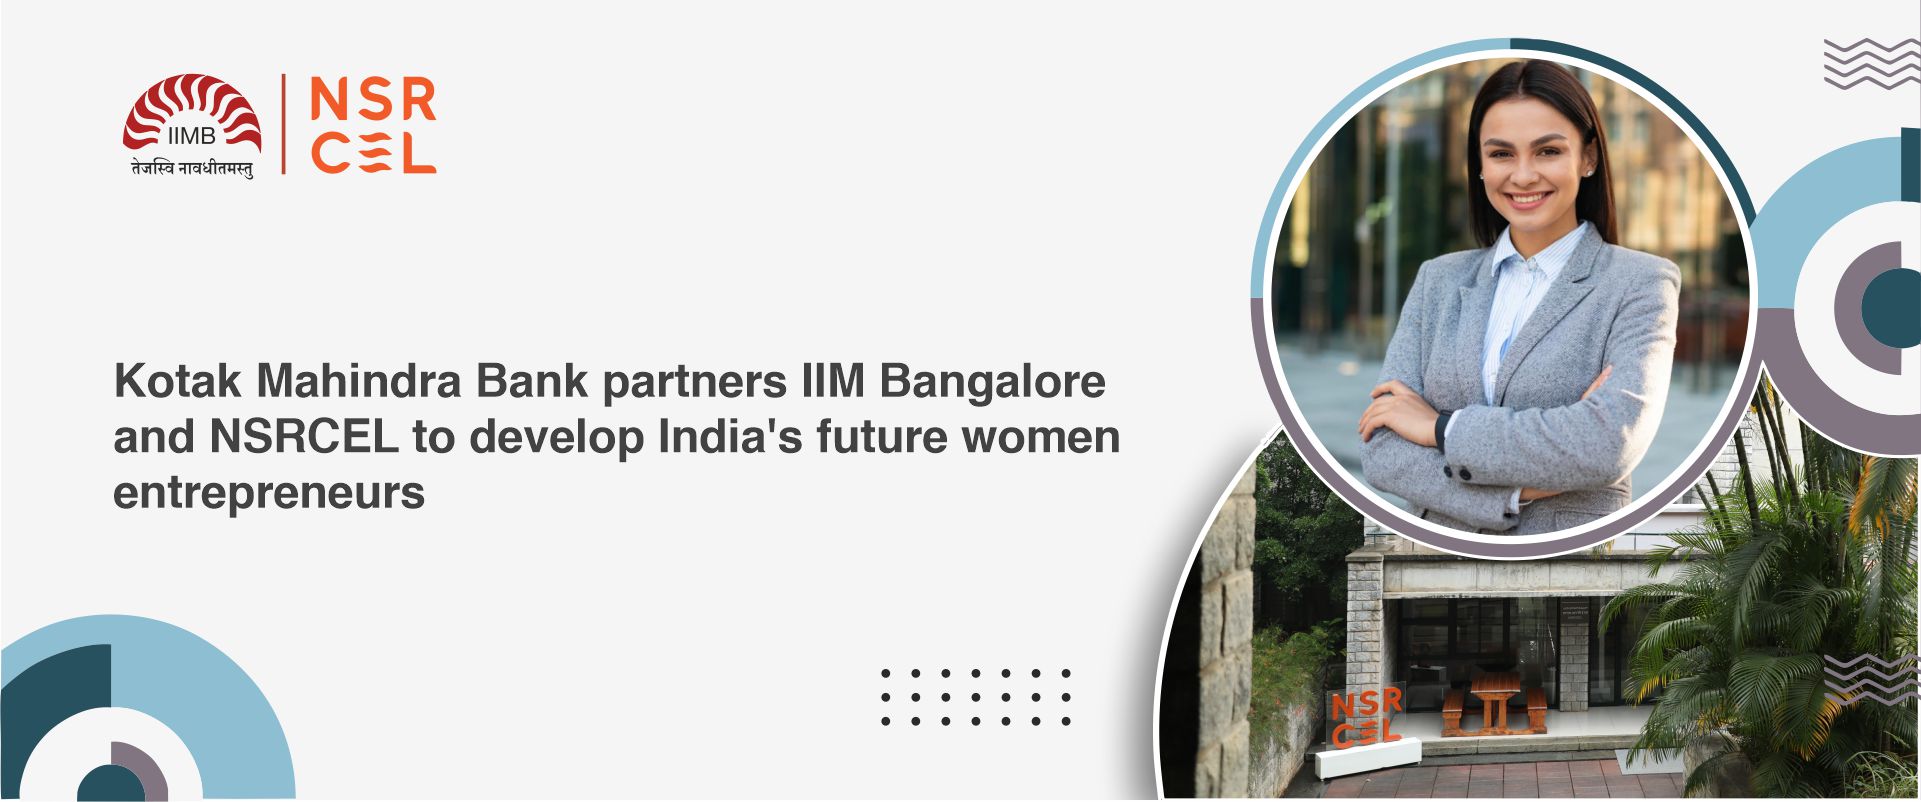 Kotak Mahindra Bank partners IIM Bangalore and NSRCEL to develop India’s future women entrepreneu